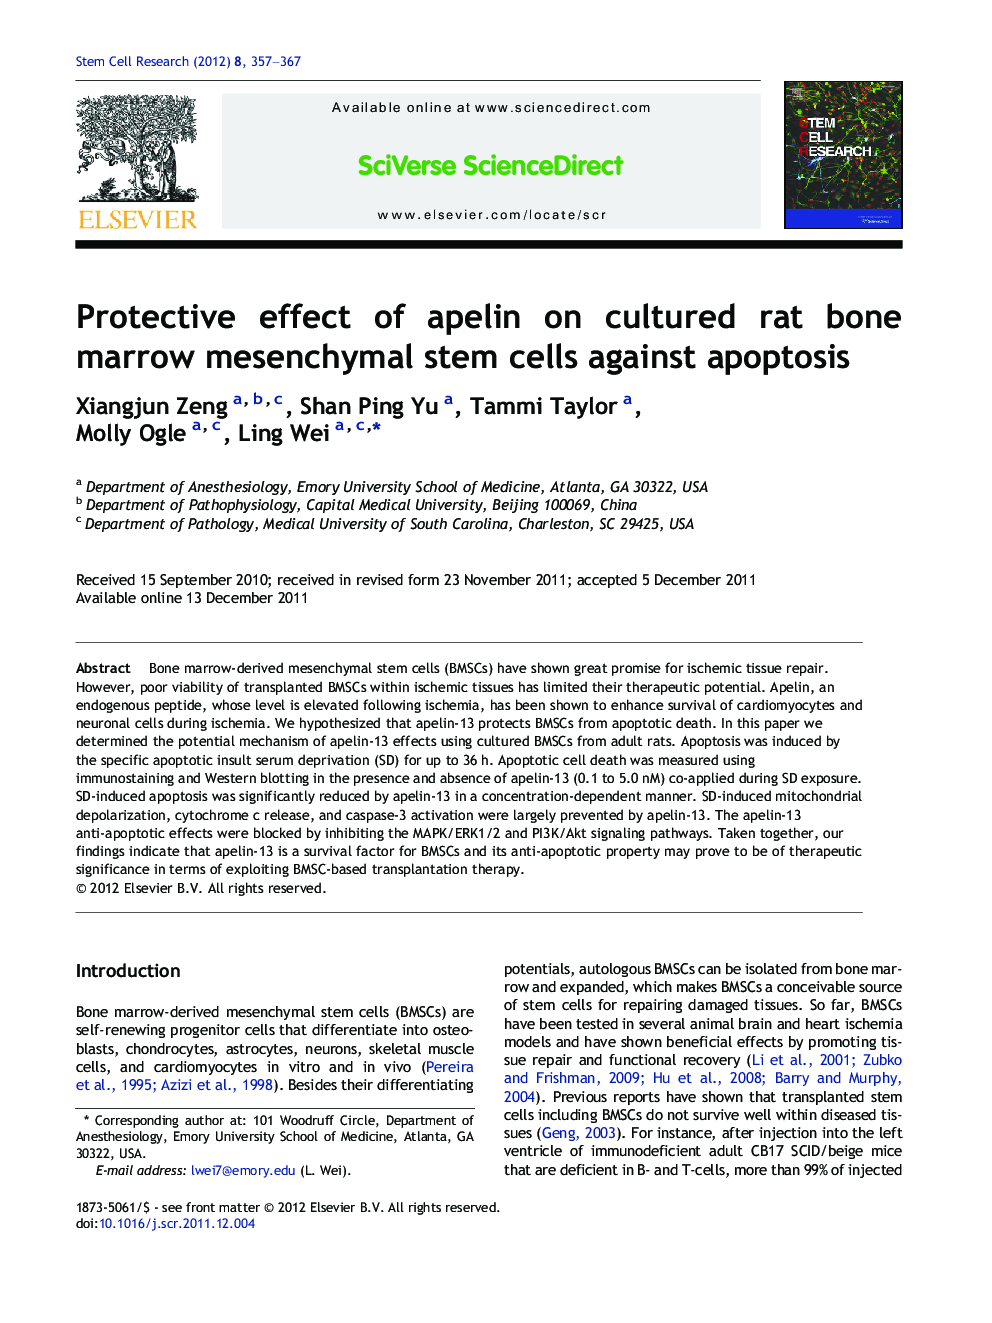 Protective effect of apelin on cultured rat bone marrow mesenchymal stem cells against apoptosis